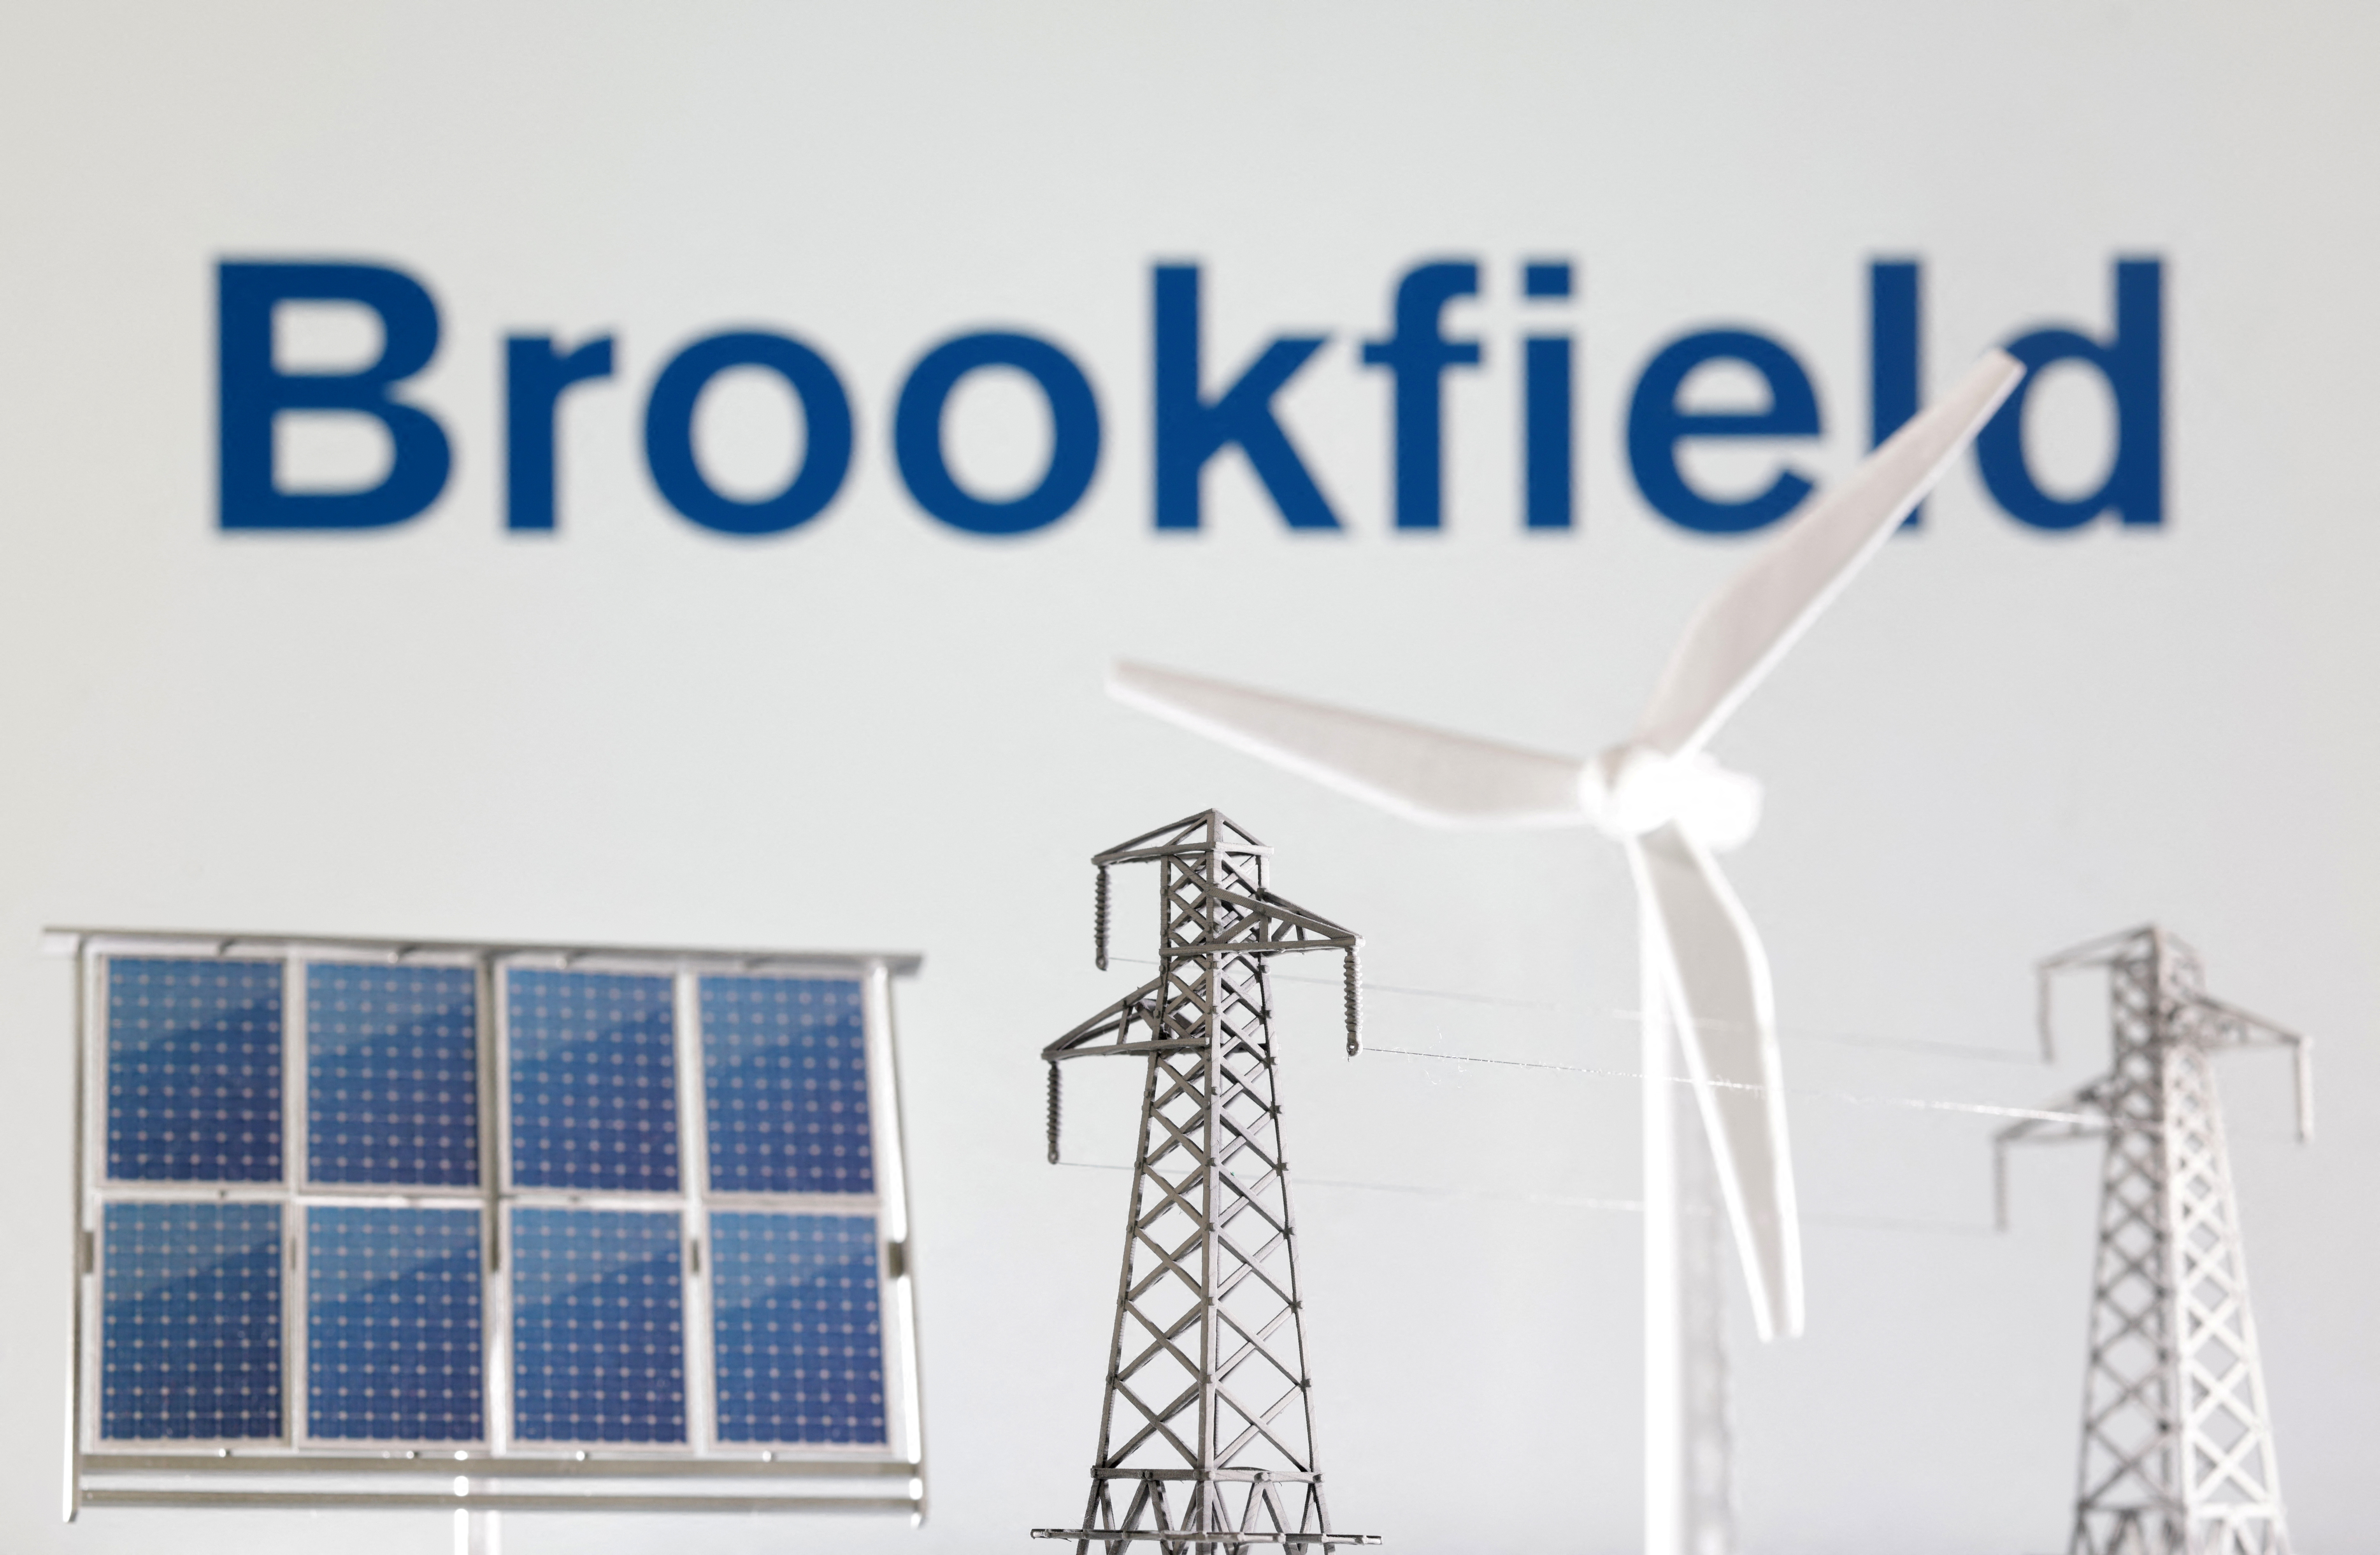 Illustration shows Brookfield Renewable logo